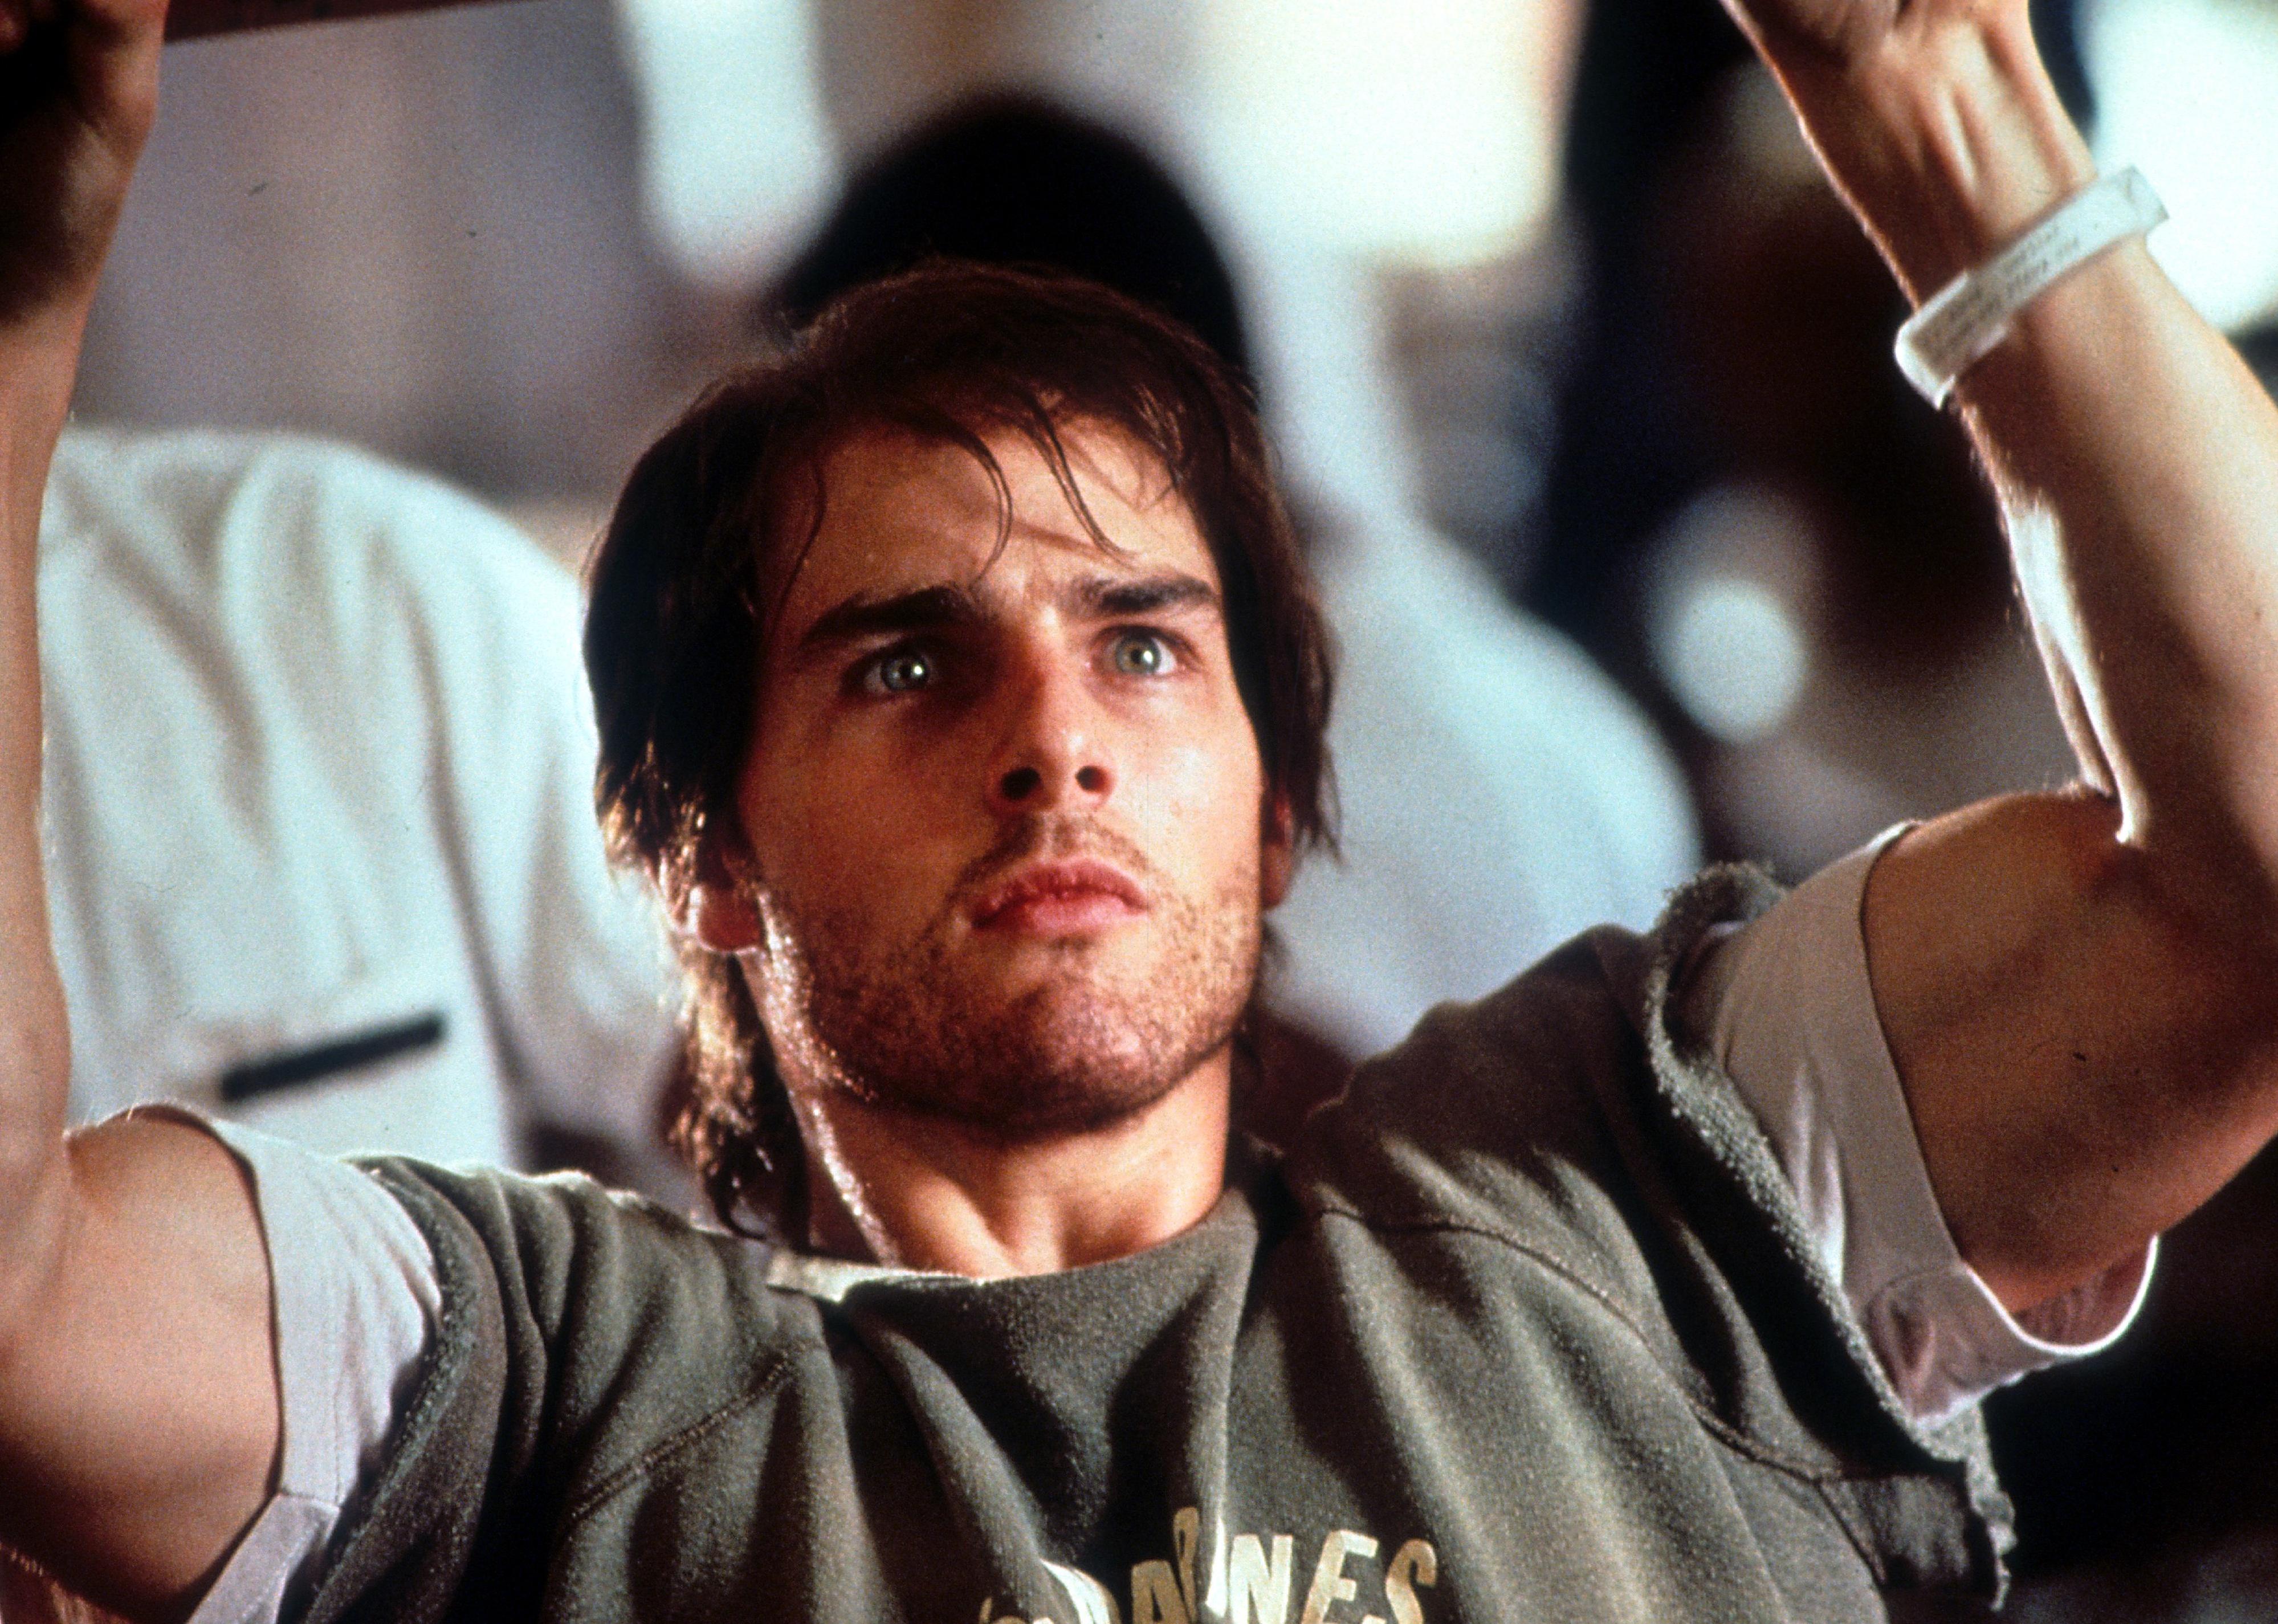 Tom Cruise in a Marines cut off sweatshirt doing chin ups.